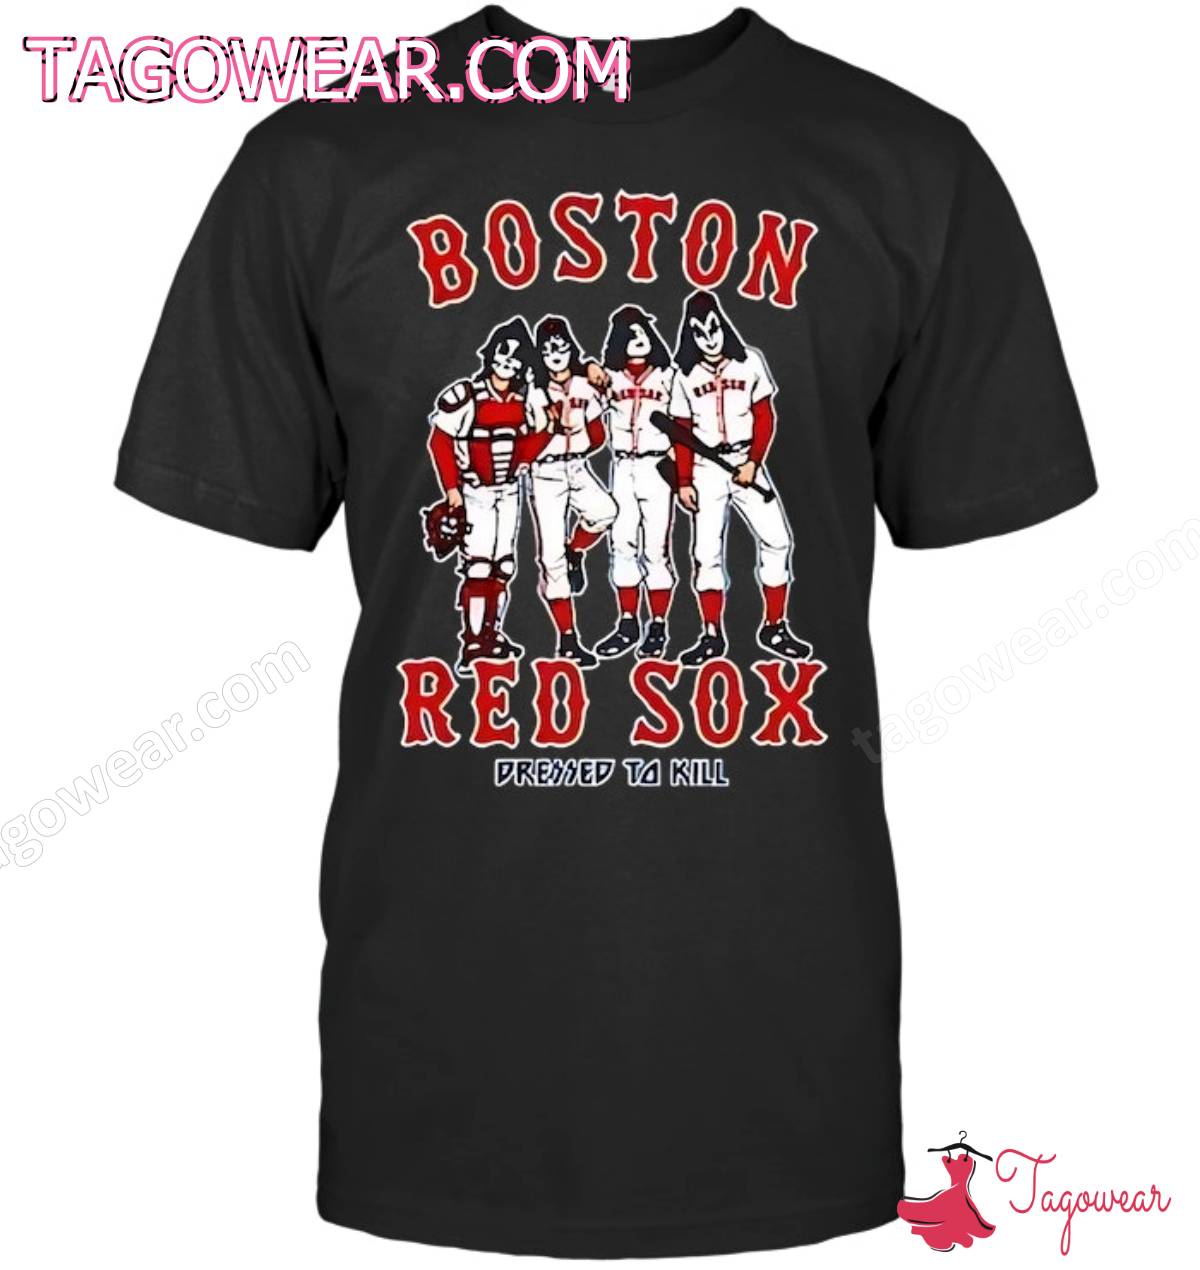 Kiss Band Boston Red Sox Dressed To Kill Shirt